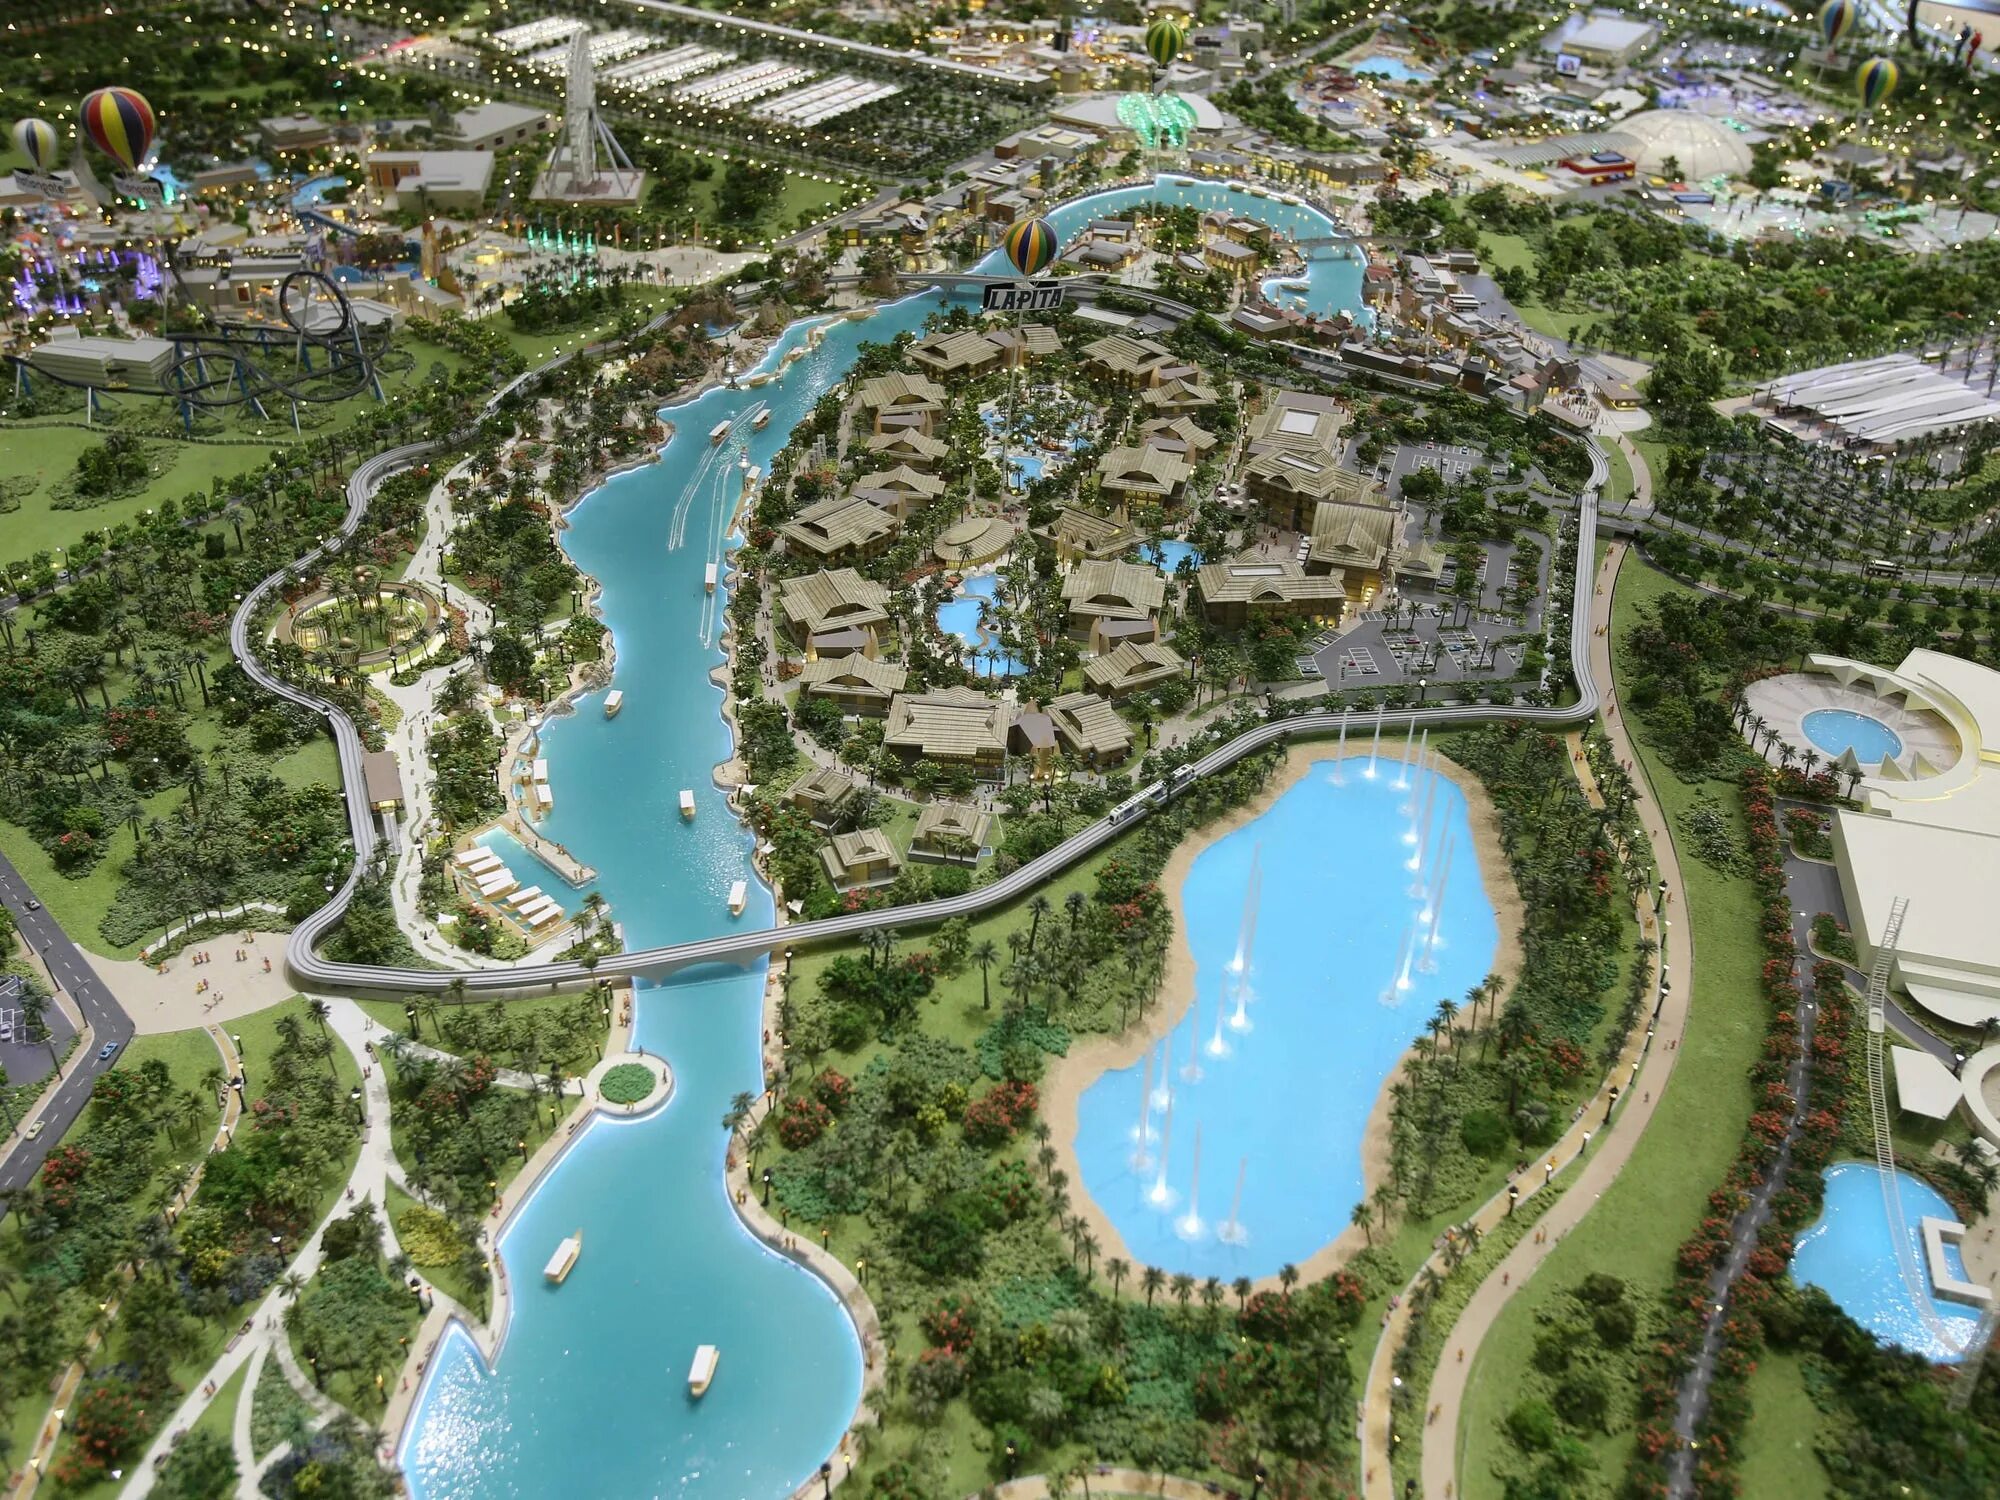 Дубайский парк. Дубай парк Резорт. Дубай Паркс энд Резорт. Riverland Dubai в Dubai Parks. Отель Lapita Dubai Parks.